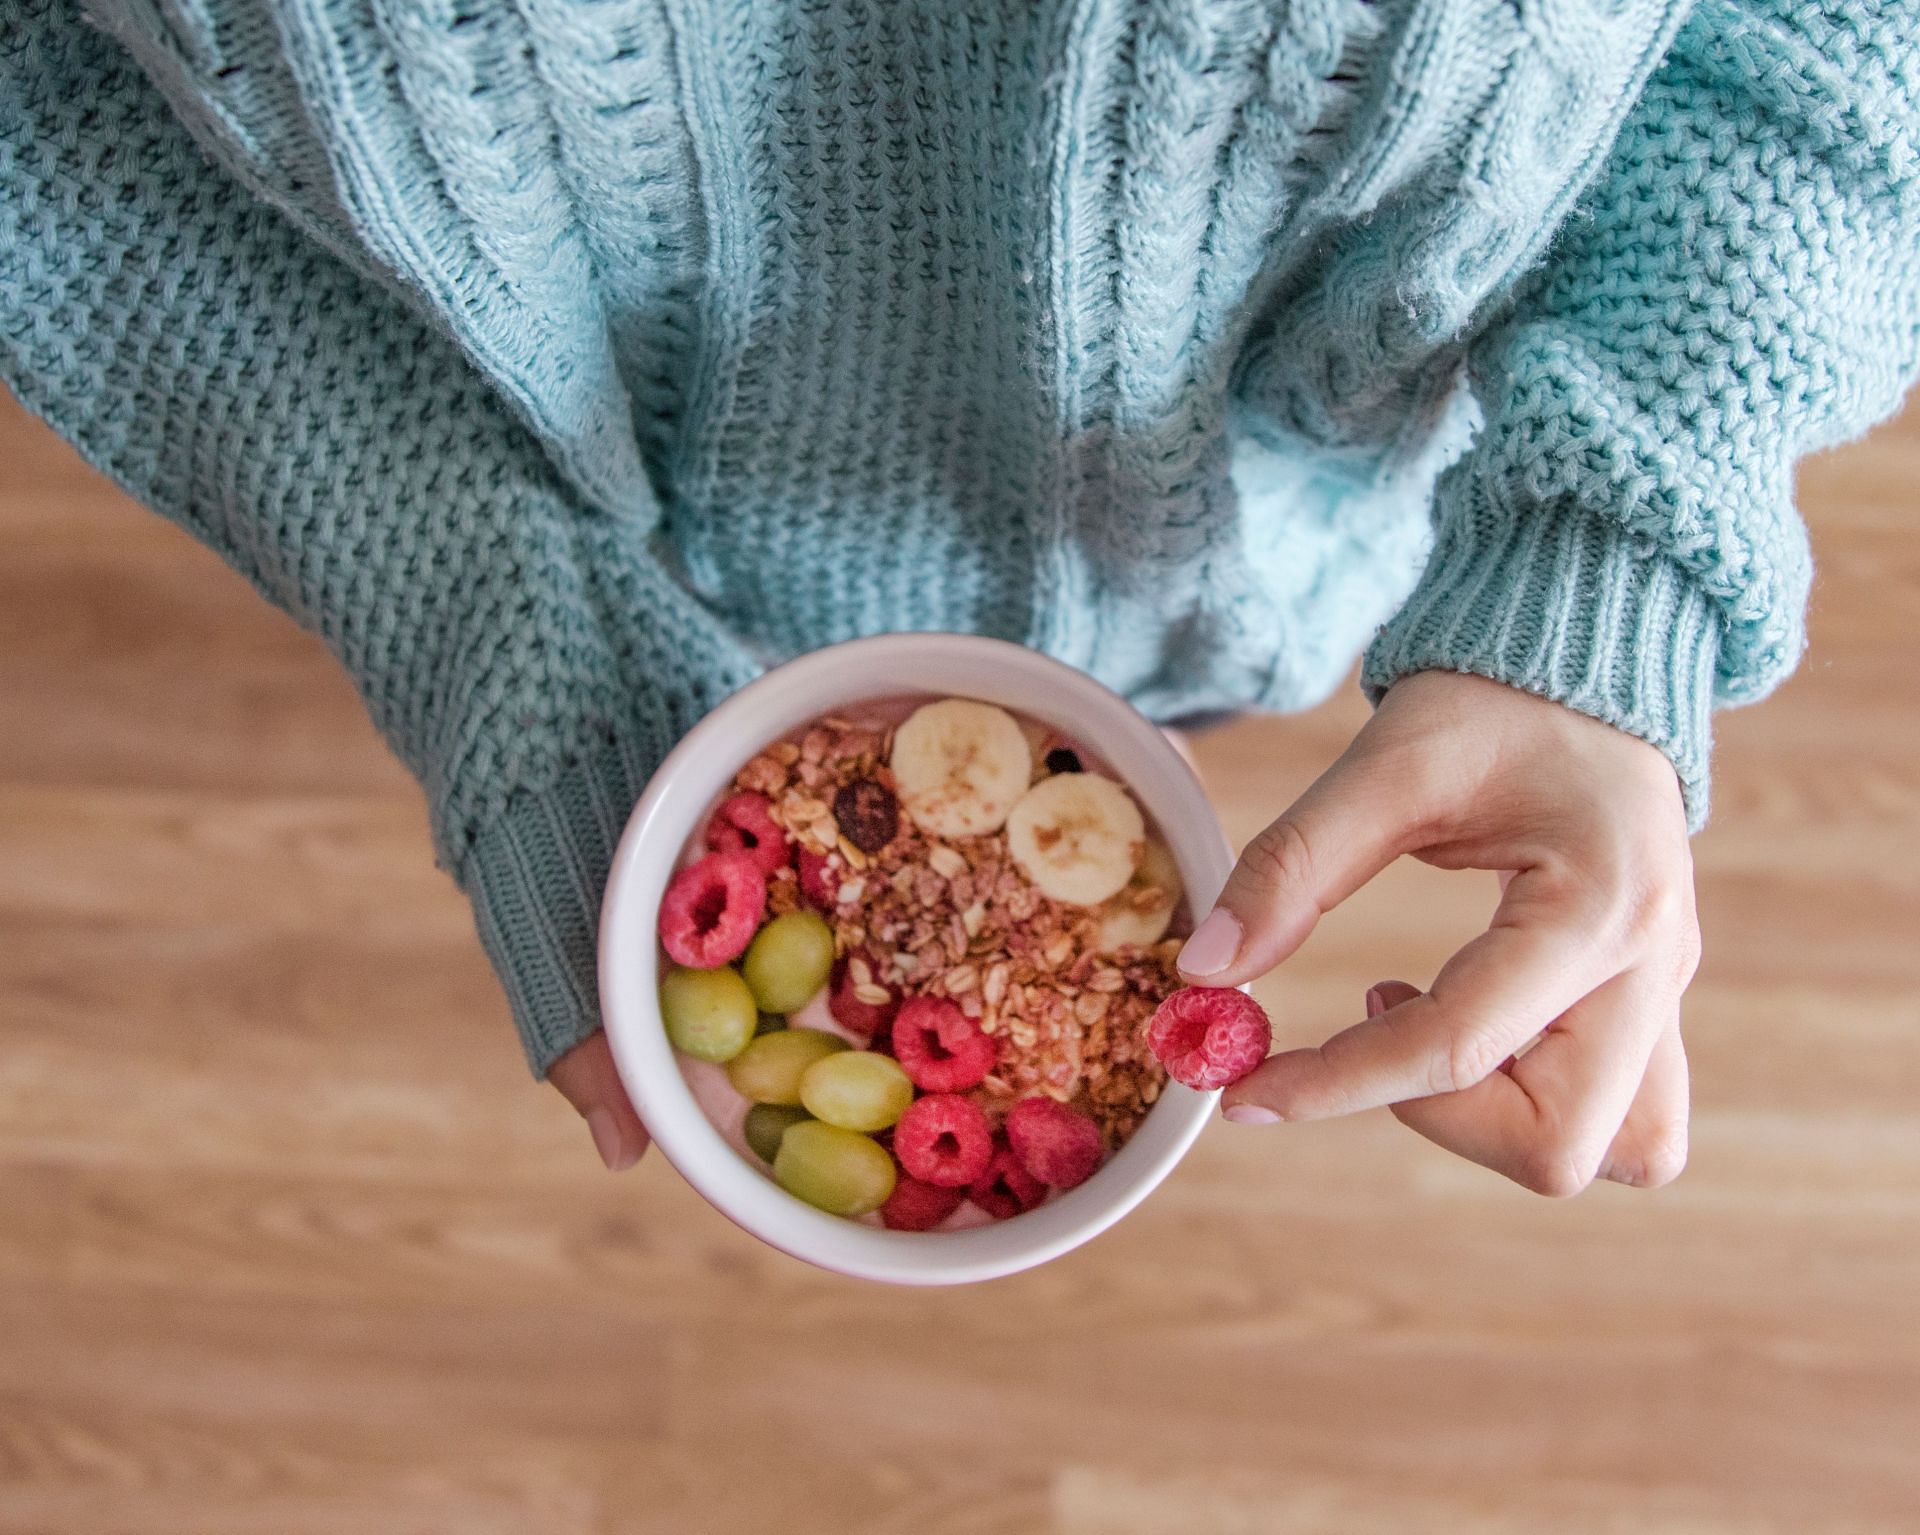 Is oatmeal good for constipation? (Image via Unsplash / Arianka Ibarra)